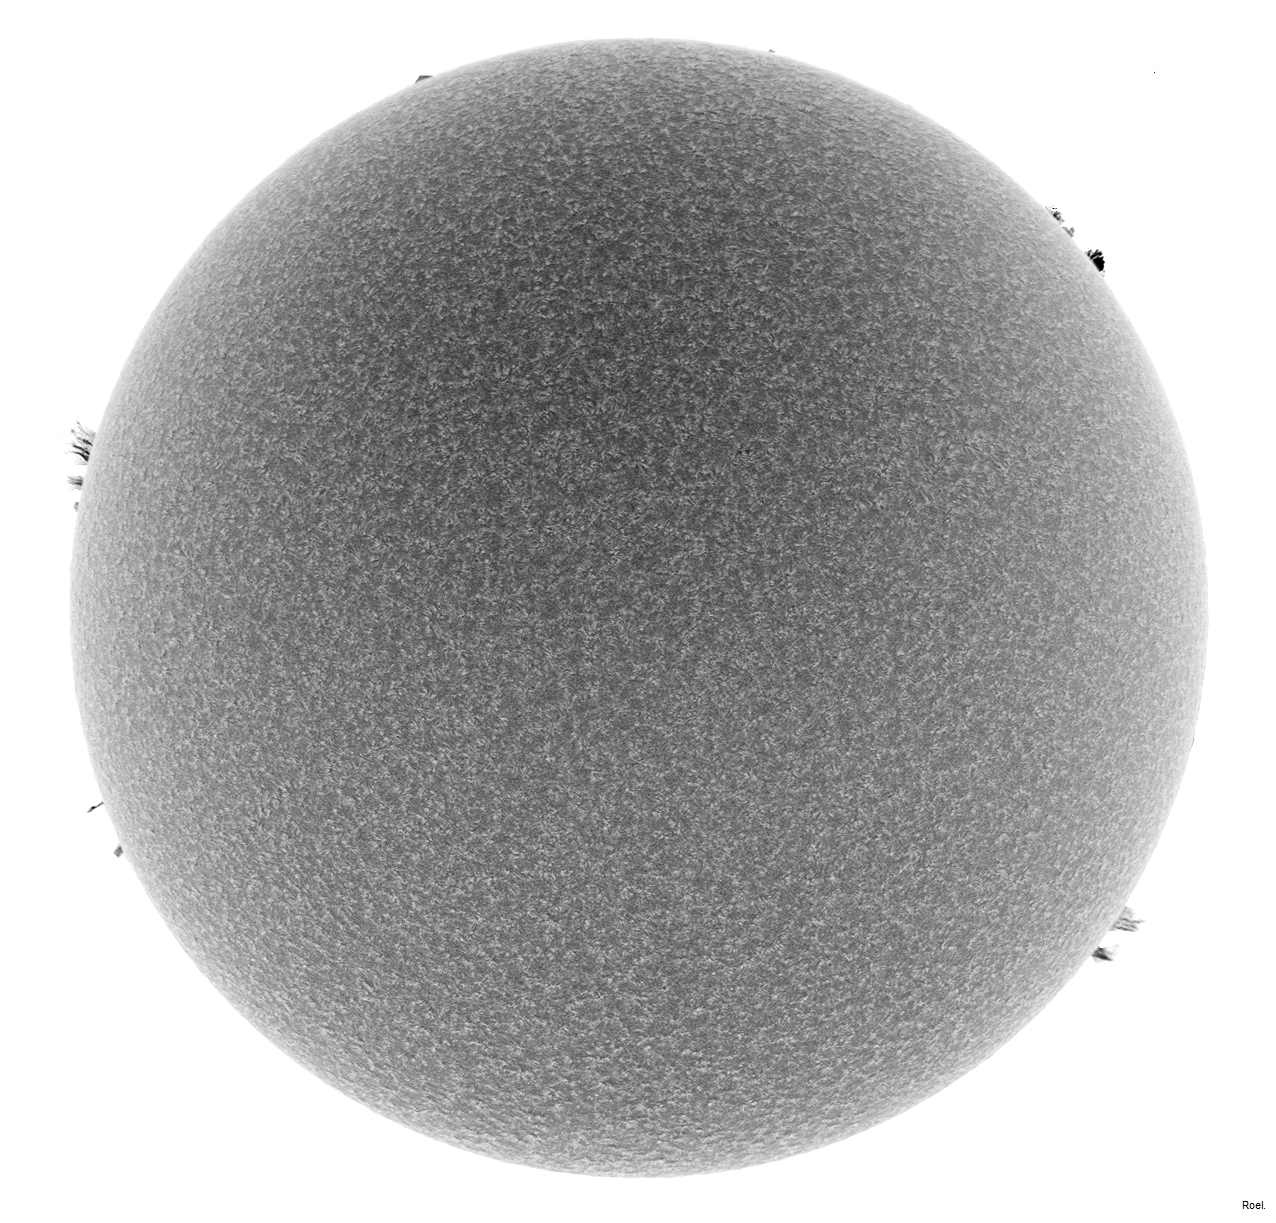 Sol del 12 de enero del 2019-Solarmax 90-DS-BF30-2neg.jpg